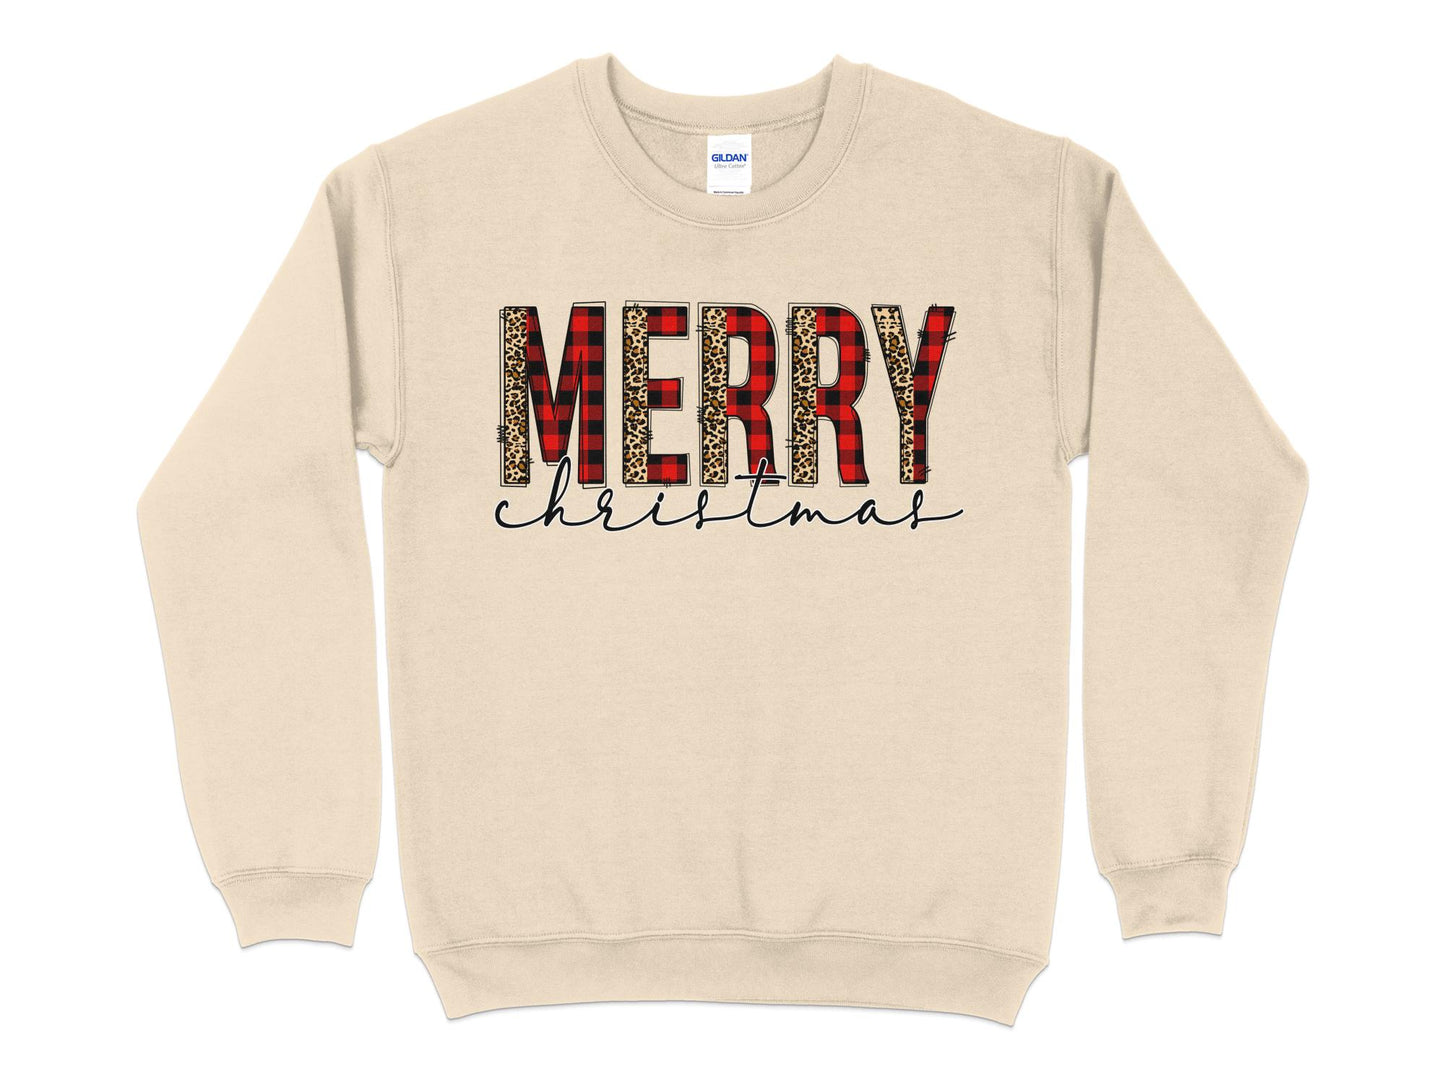 Merry Christmas Leopard Print Sweatshirt, Christmas Sweater, Leopard Print Christmas Sweatshirt, Christmas Gifts for Women - Mardonyx Sweatshirt S / Sand